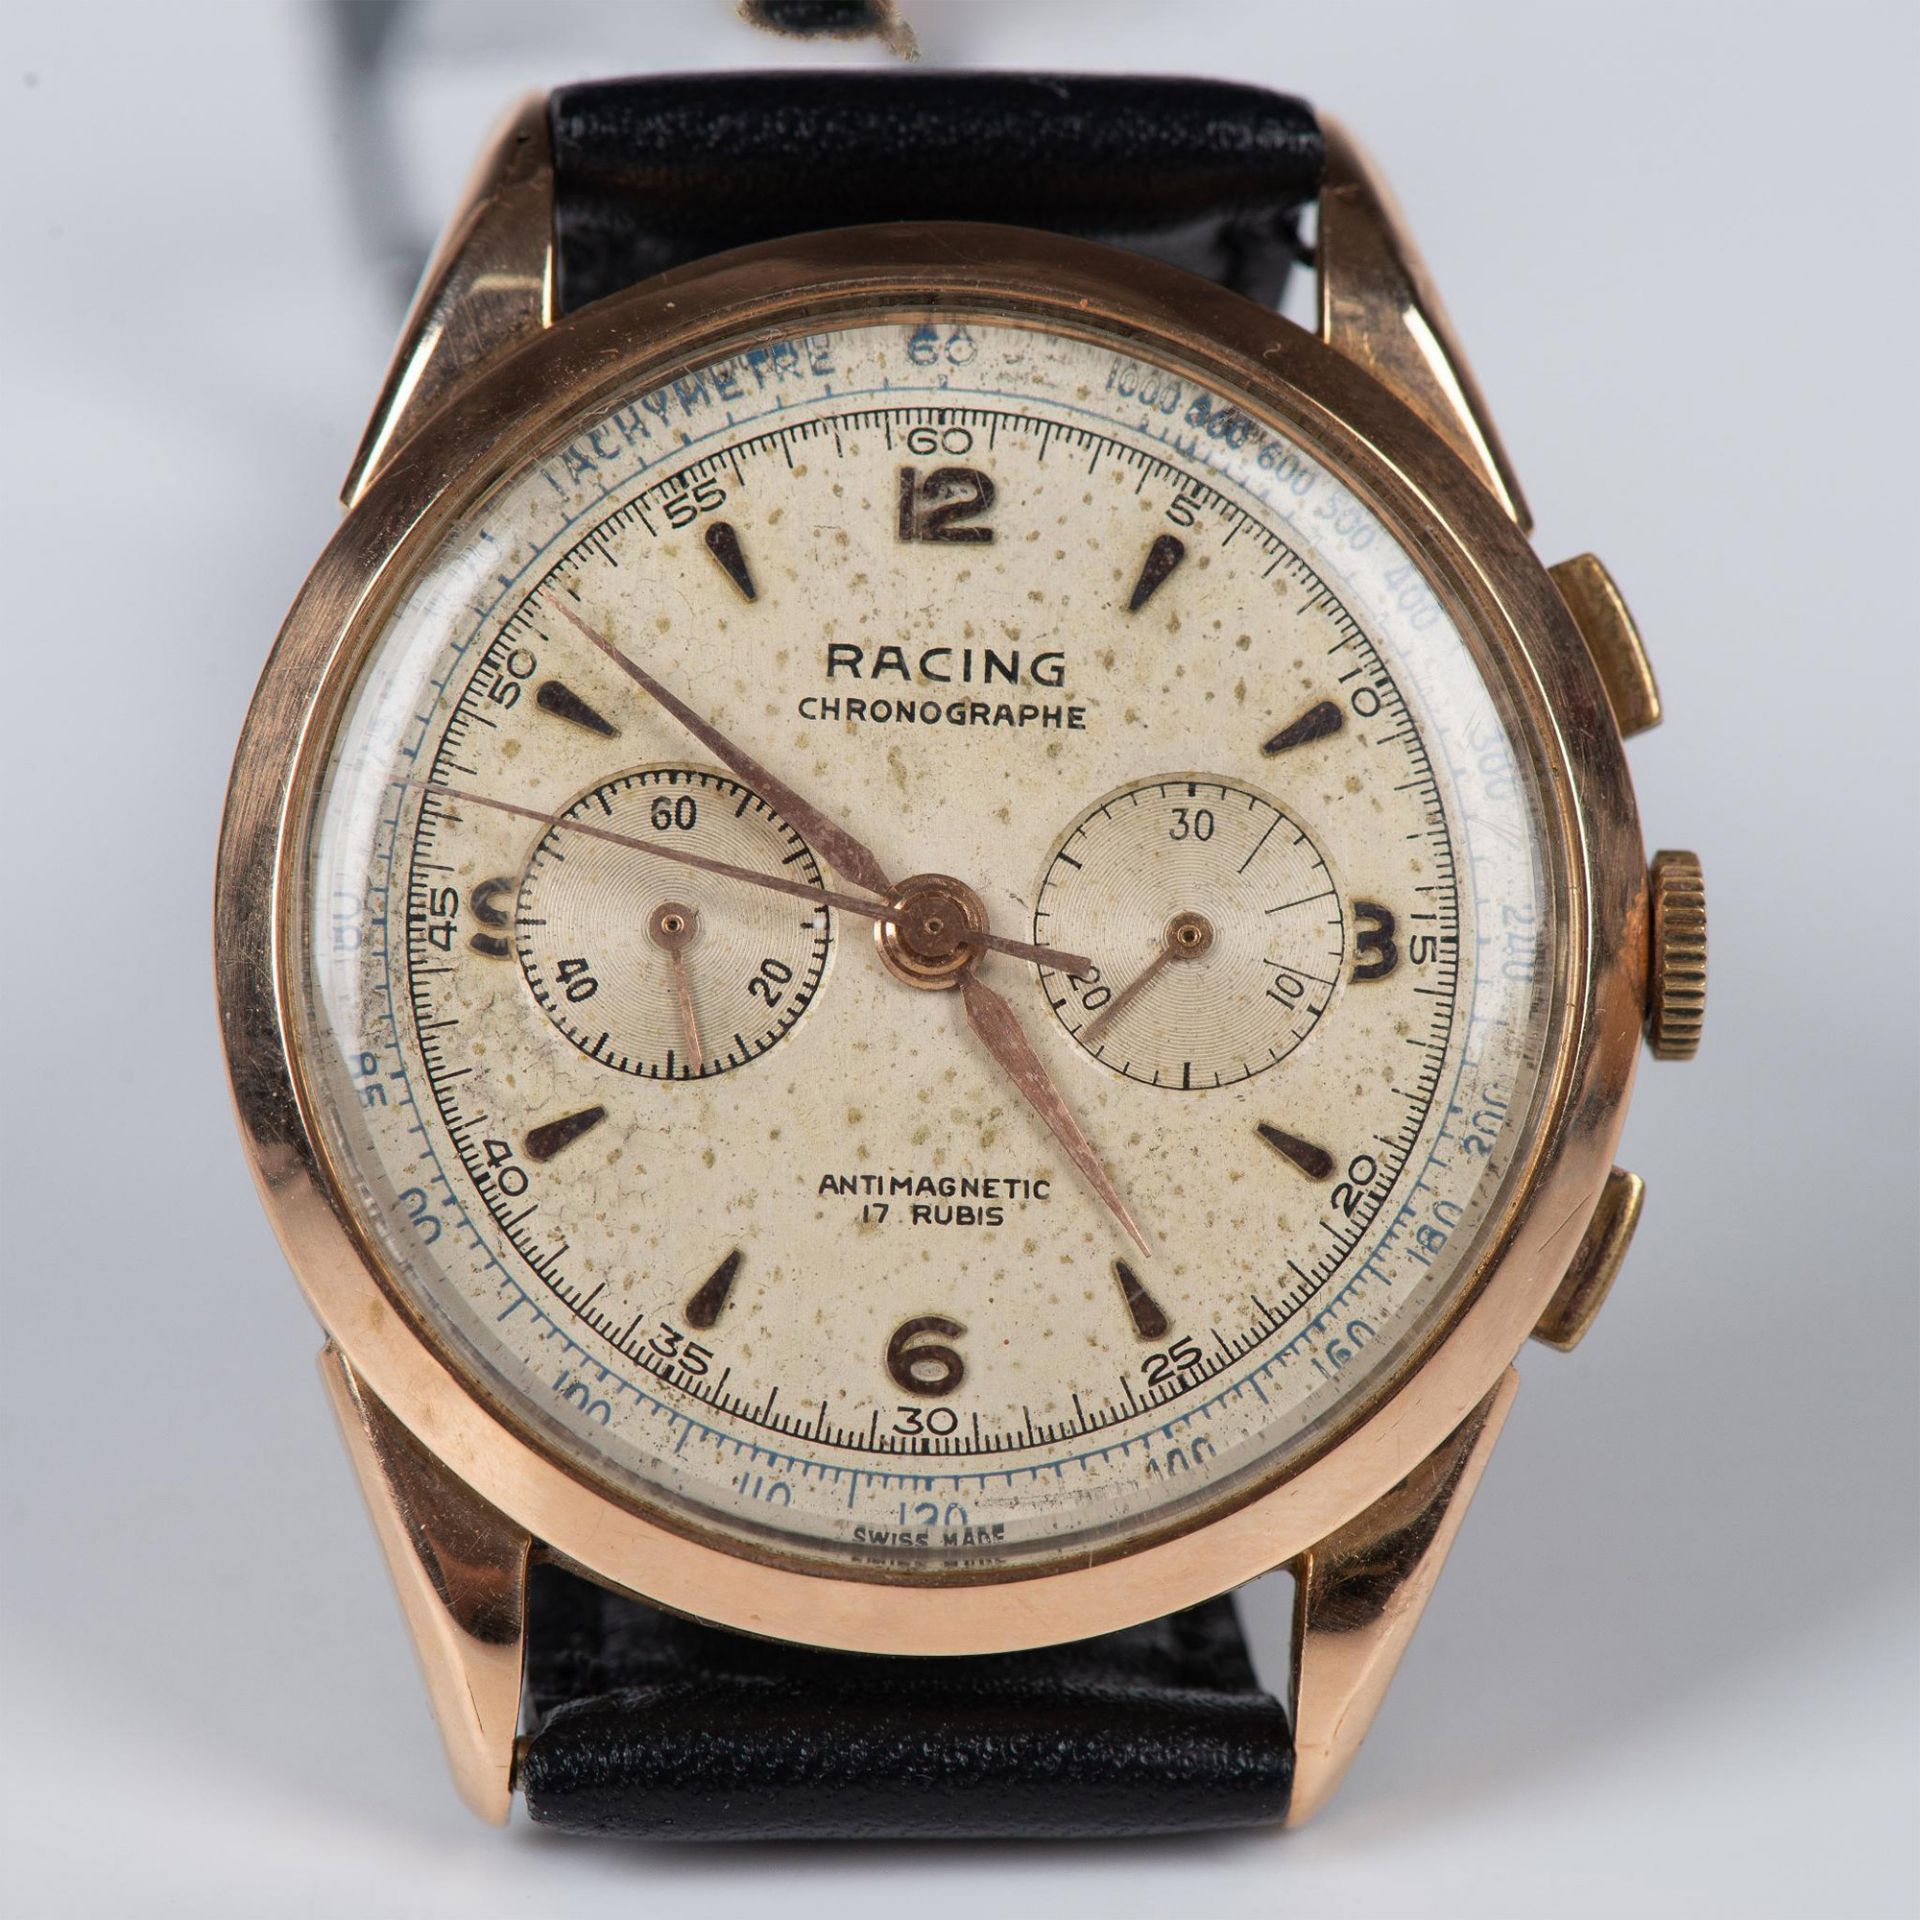 Racing Chronograph 18K Gold Men's Wrist Watch - Image 7 of 11